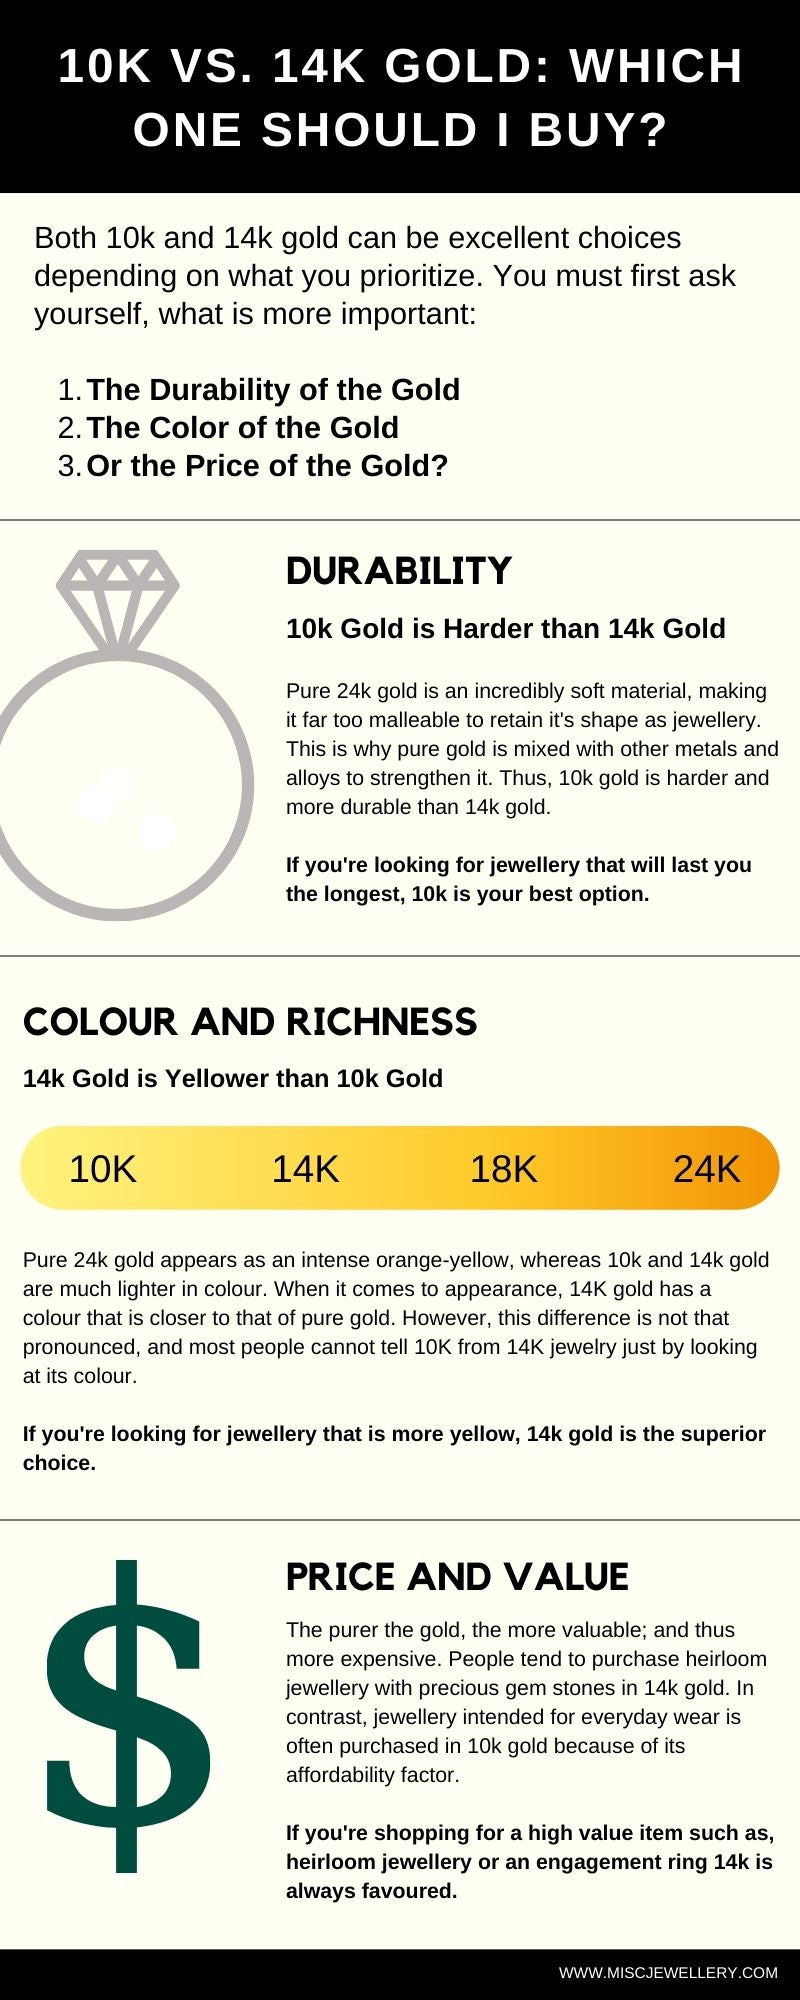 10k vs 14k gold infographic